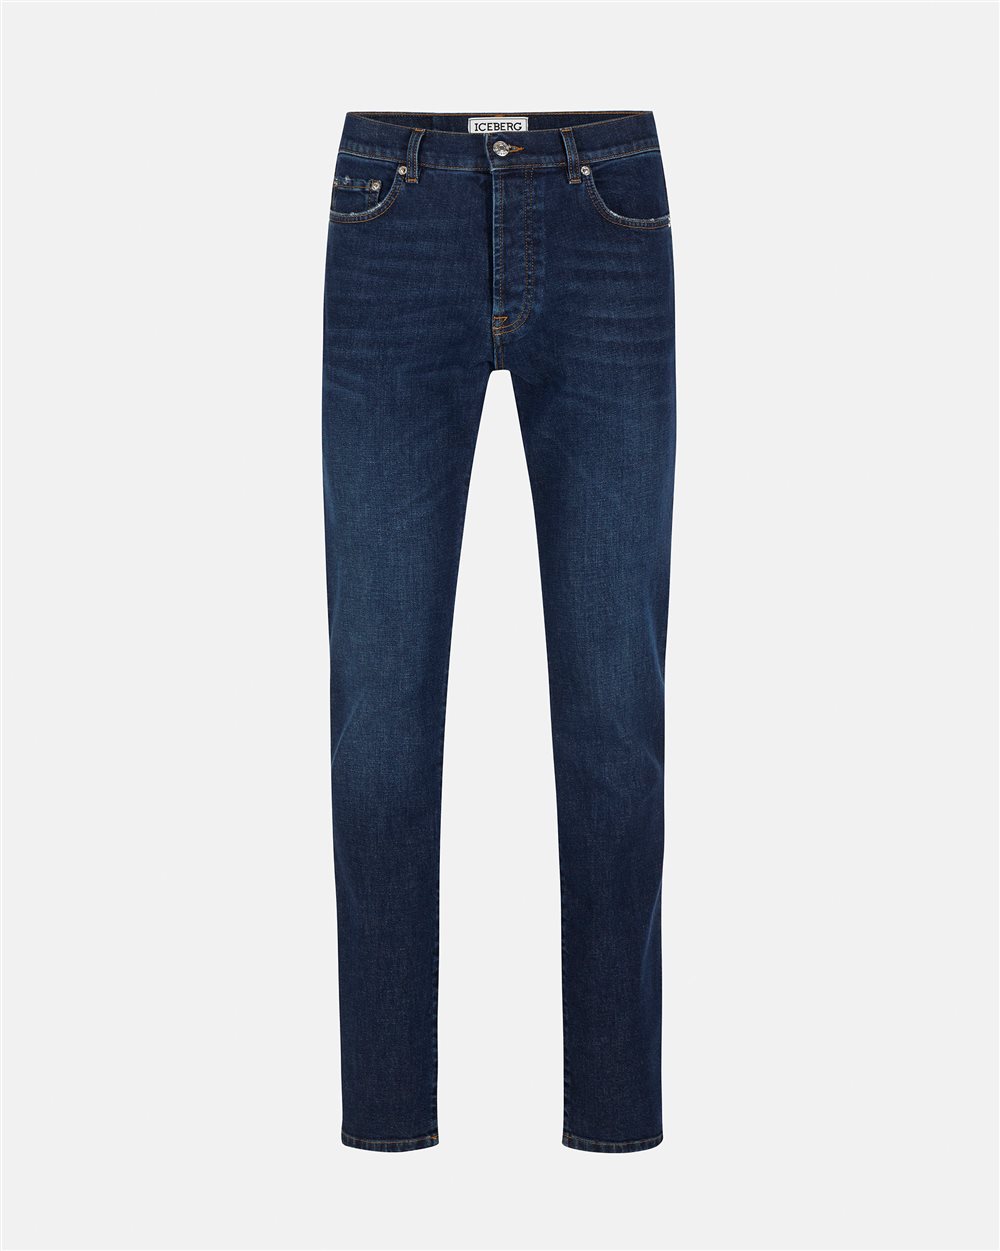 Classic 5-pocket blue jeans - Iceberg - Official Website